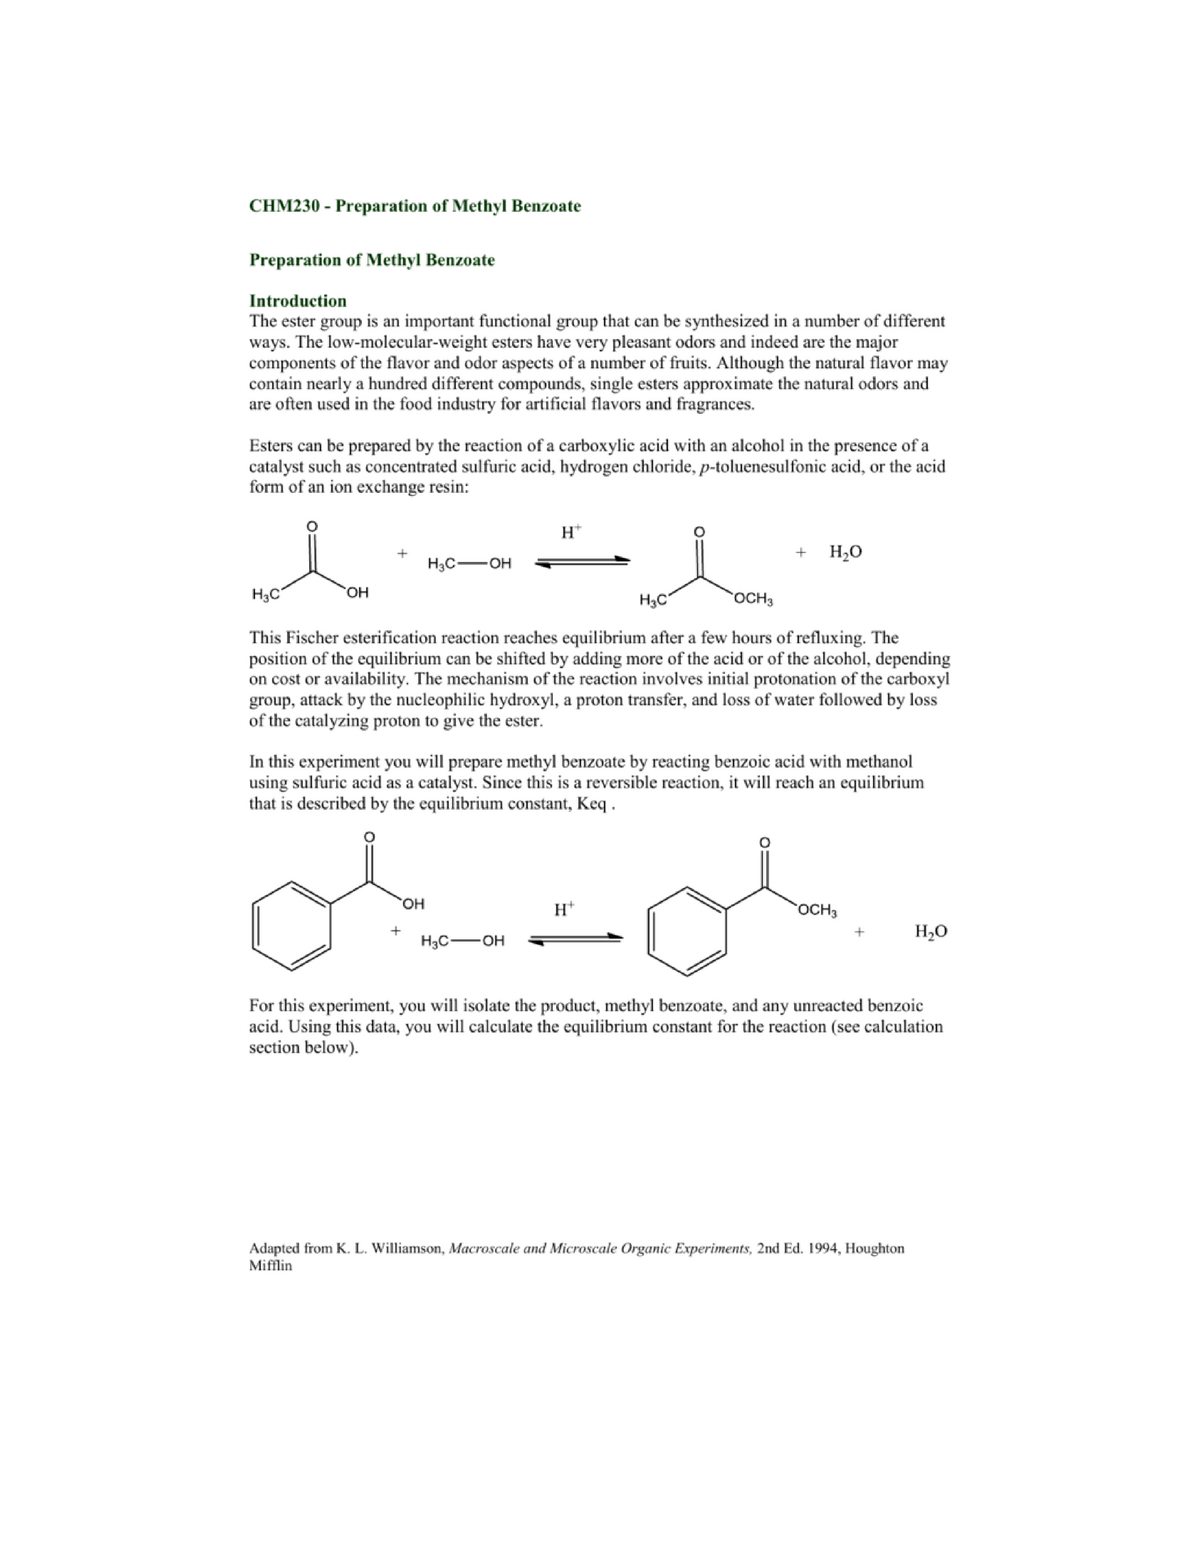 organic chemistry assignment pdf